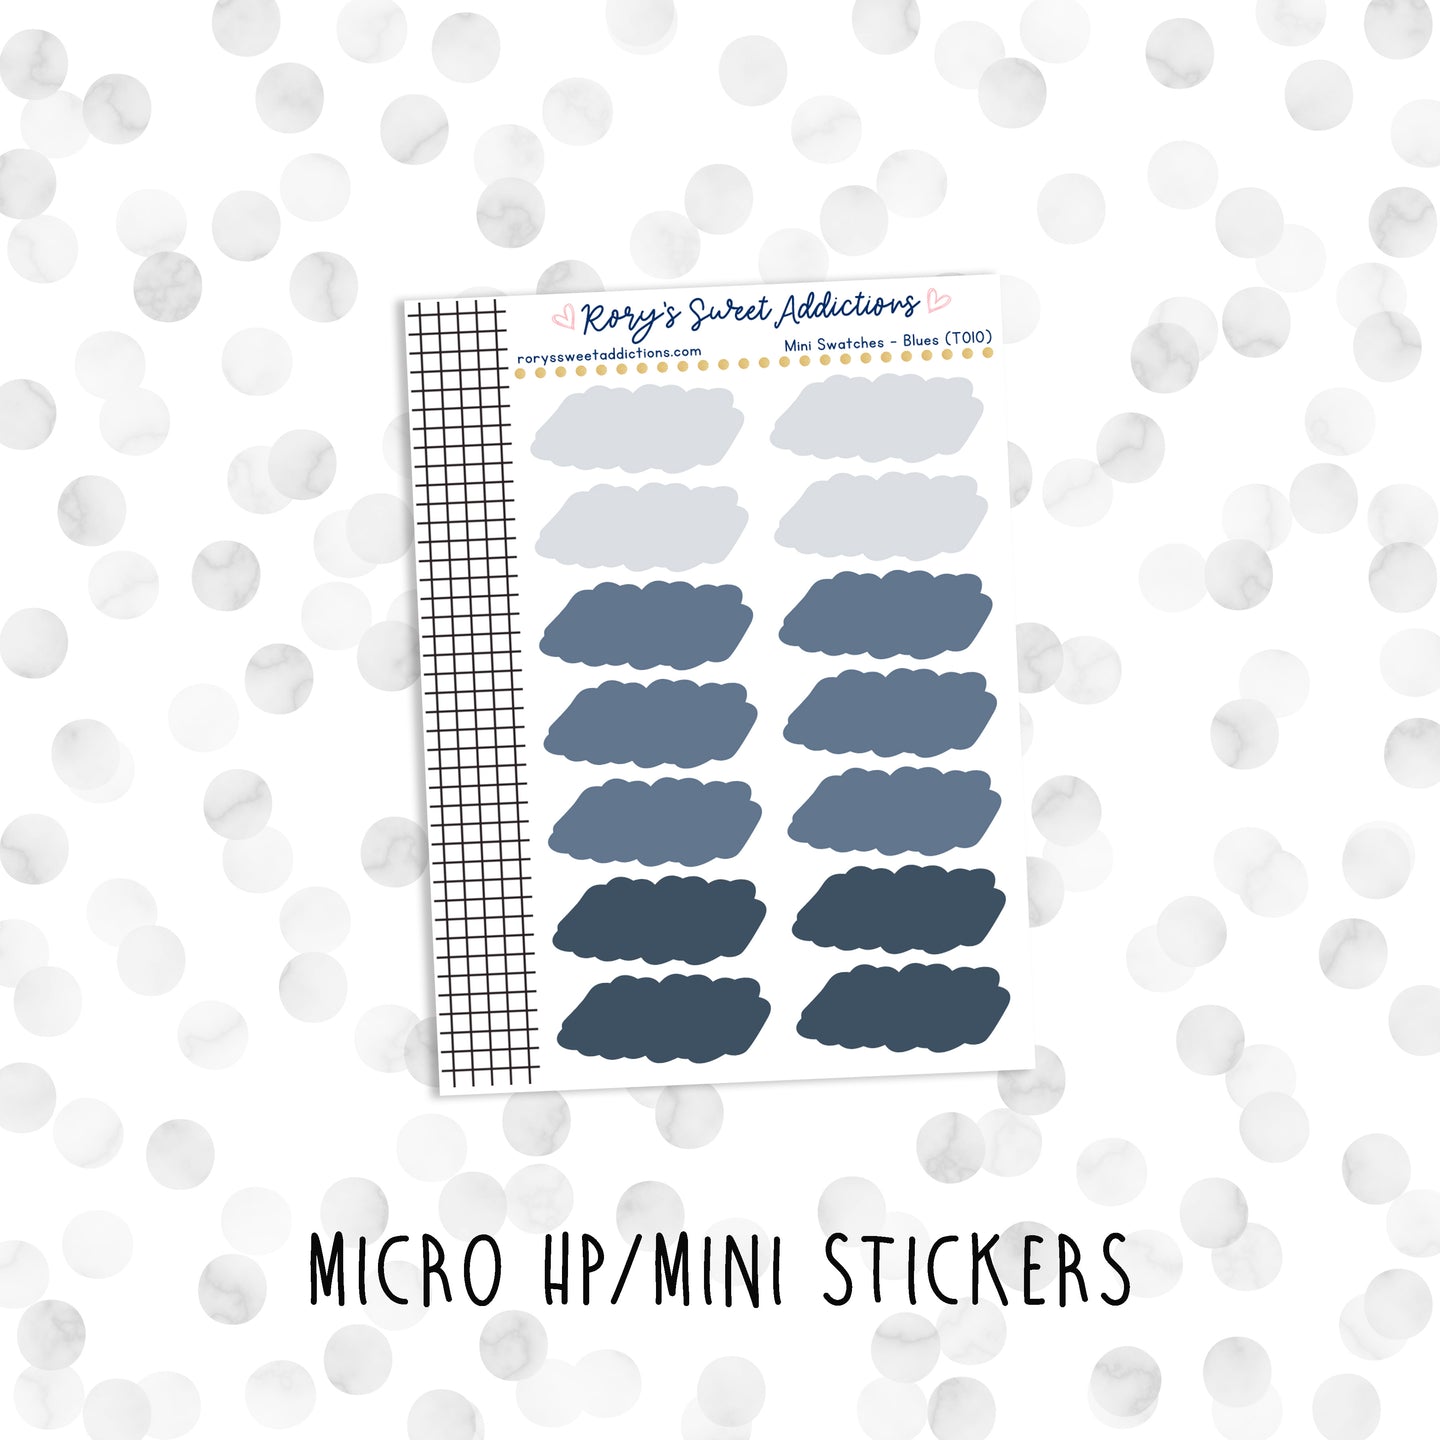 Mini Swatches - Blues // Micro HP - Mini Stickers